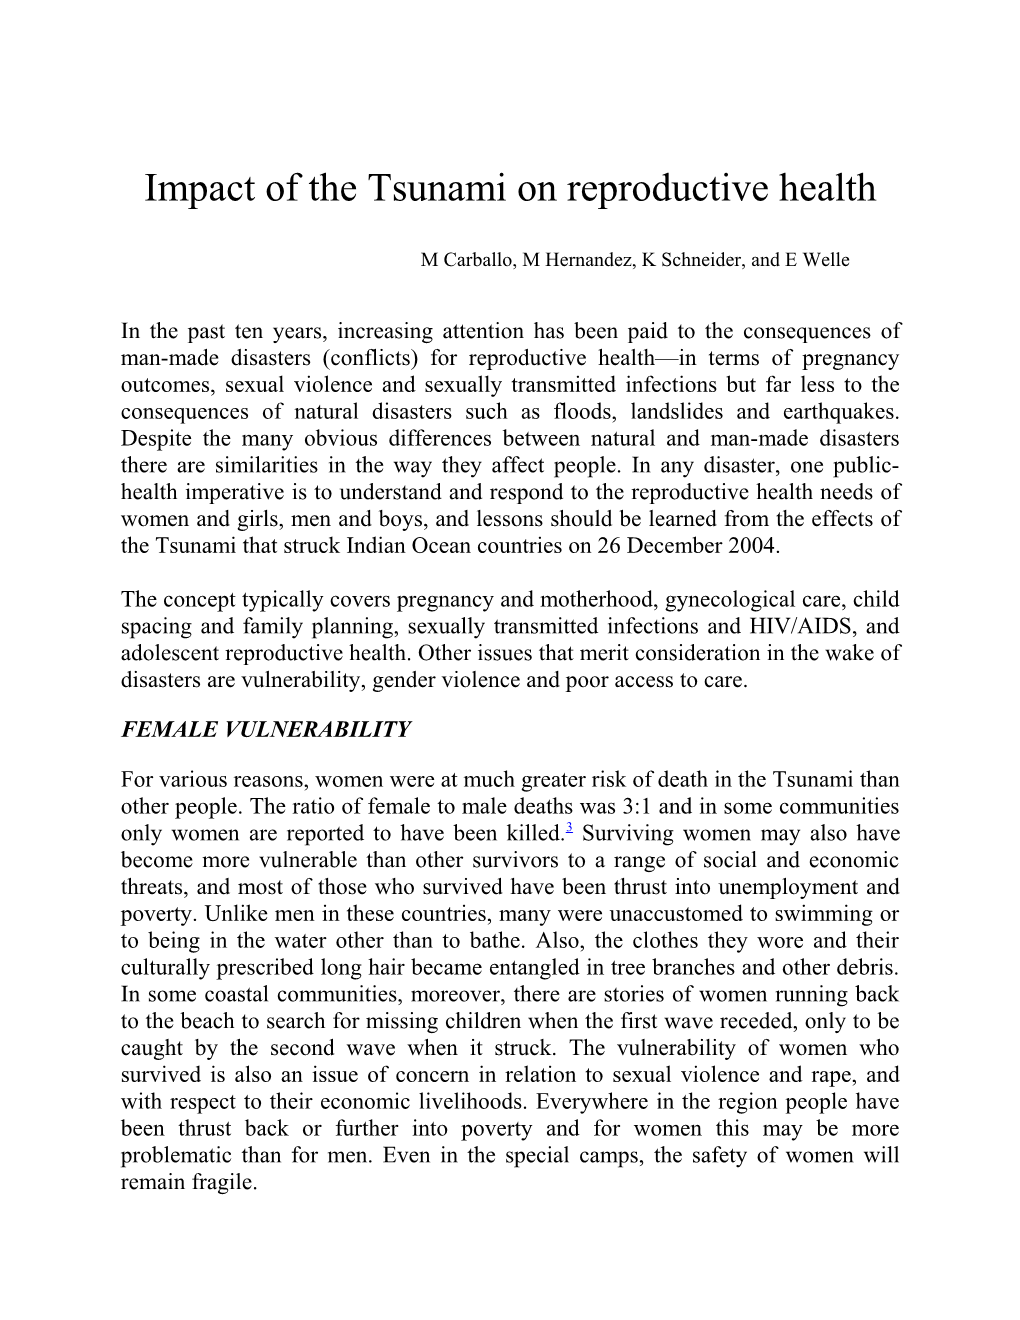 Impact of the Tsunami on Reproductive Health